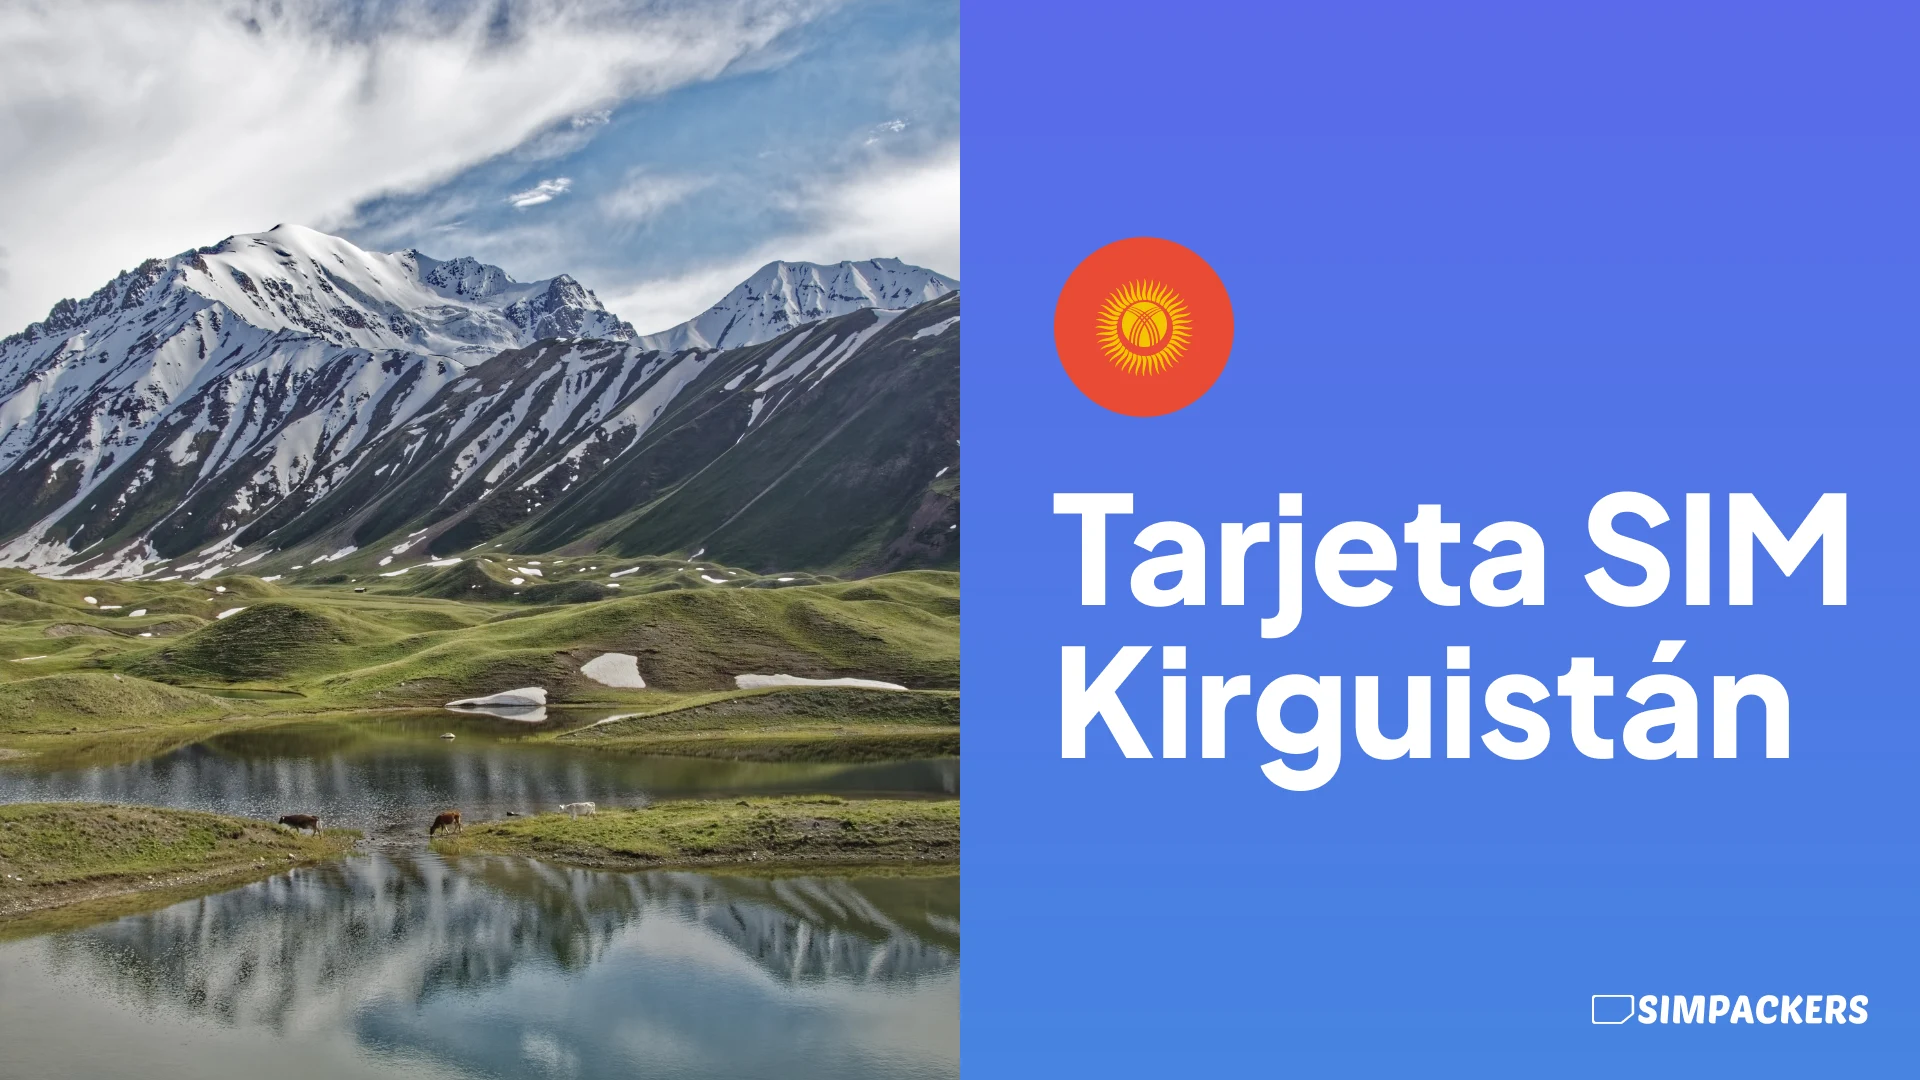 ES/FEATURED_IMAGES/tarjeta-sim-kirguistan.webp